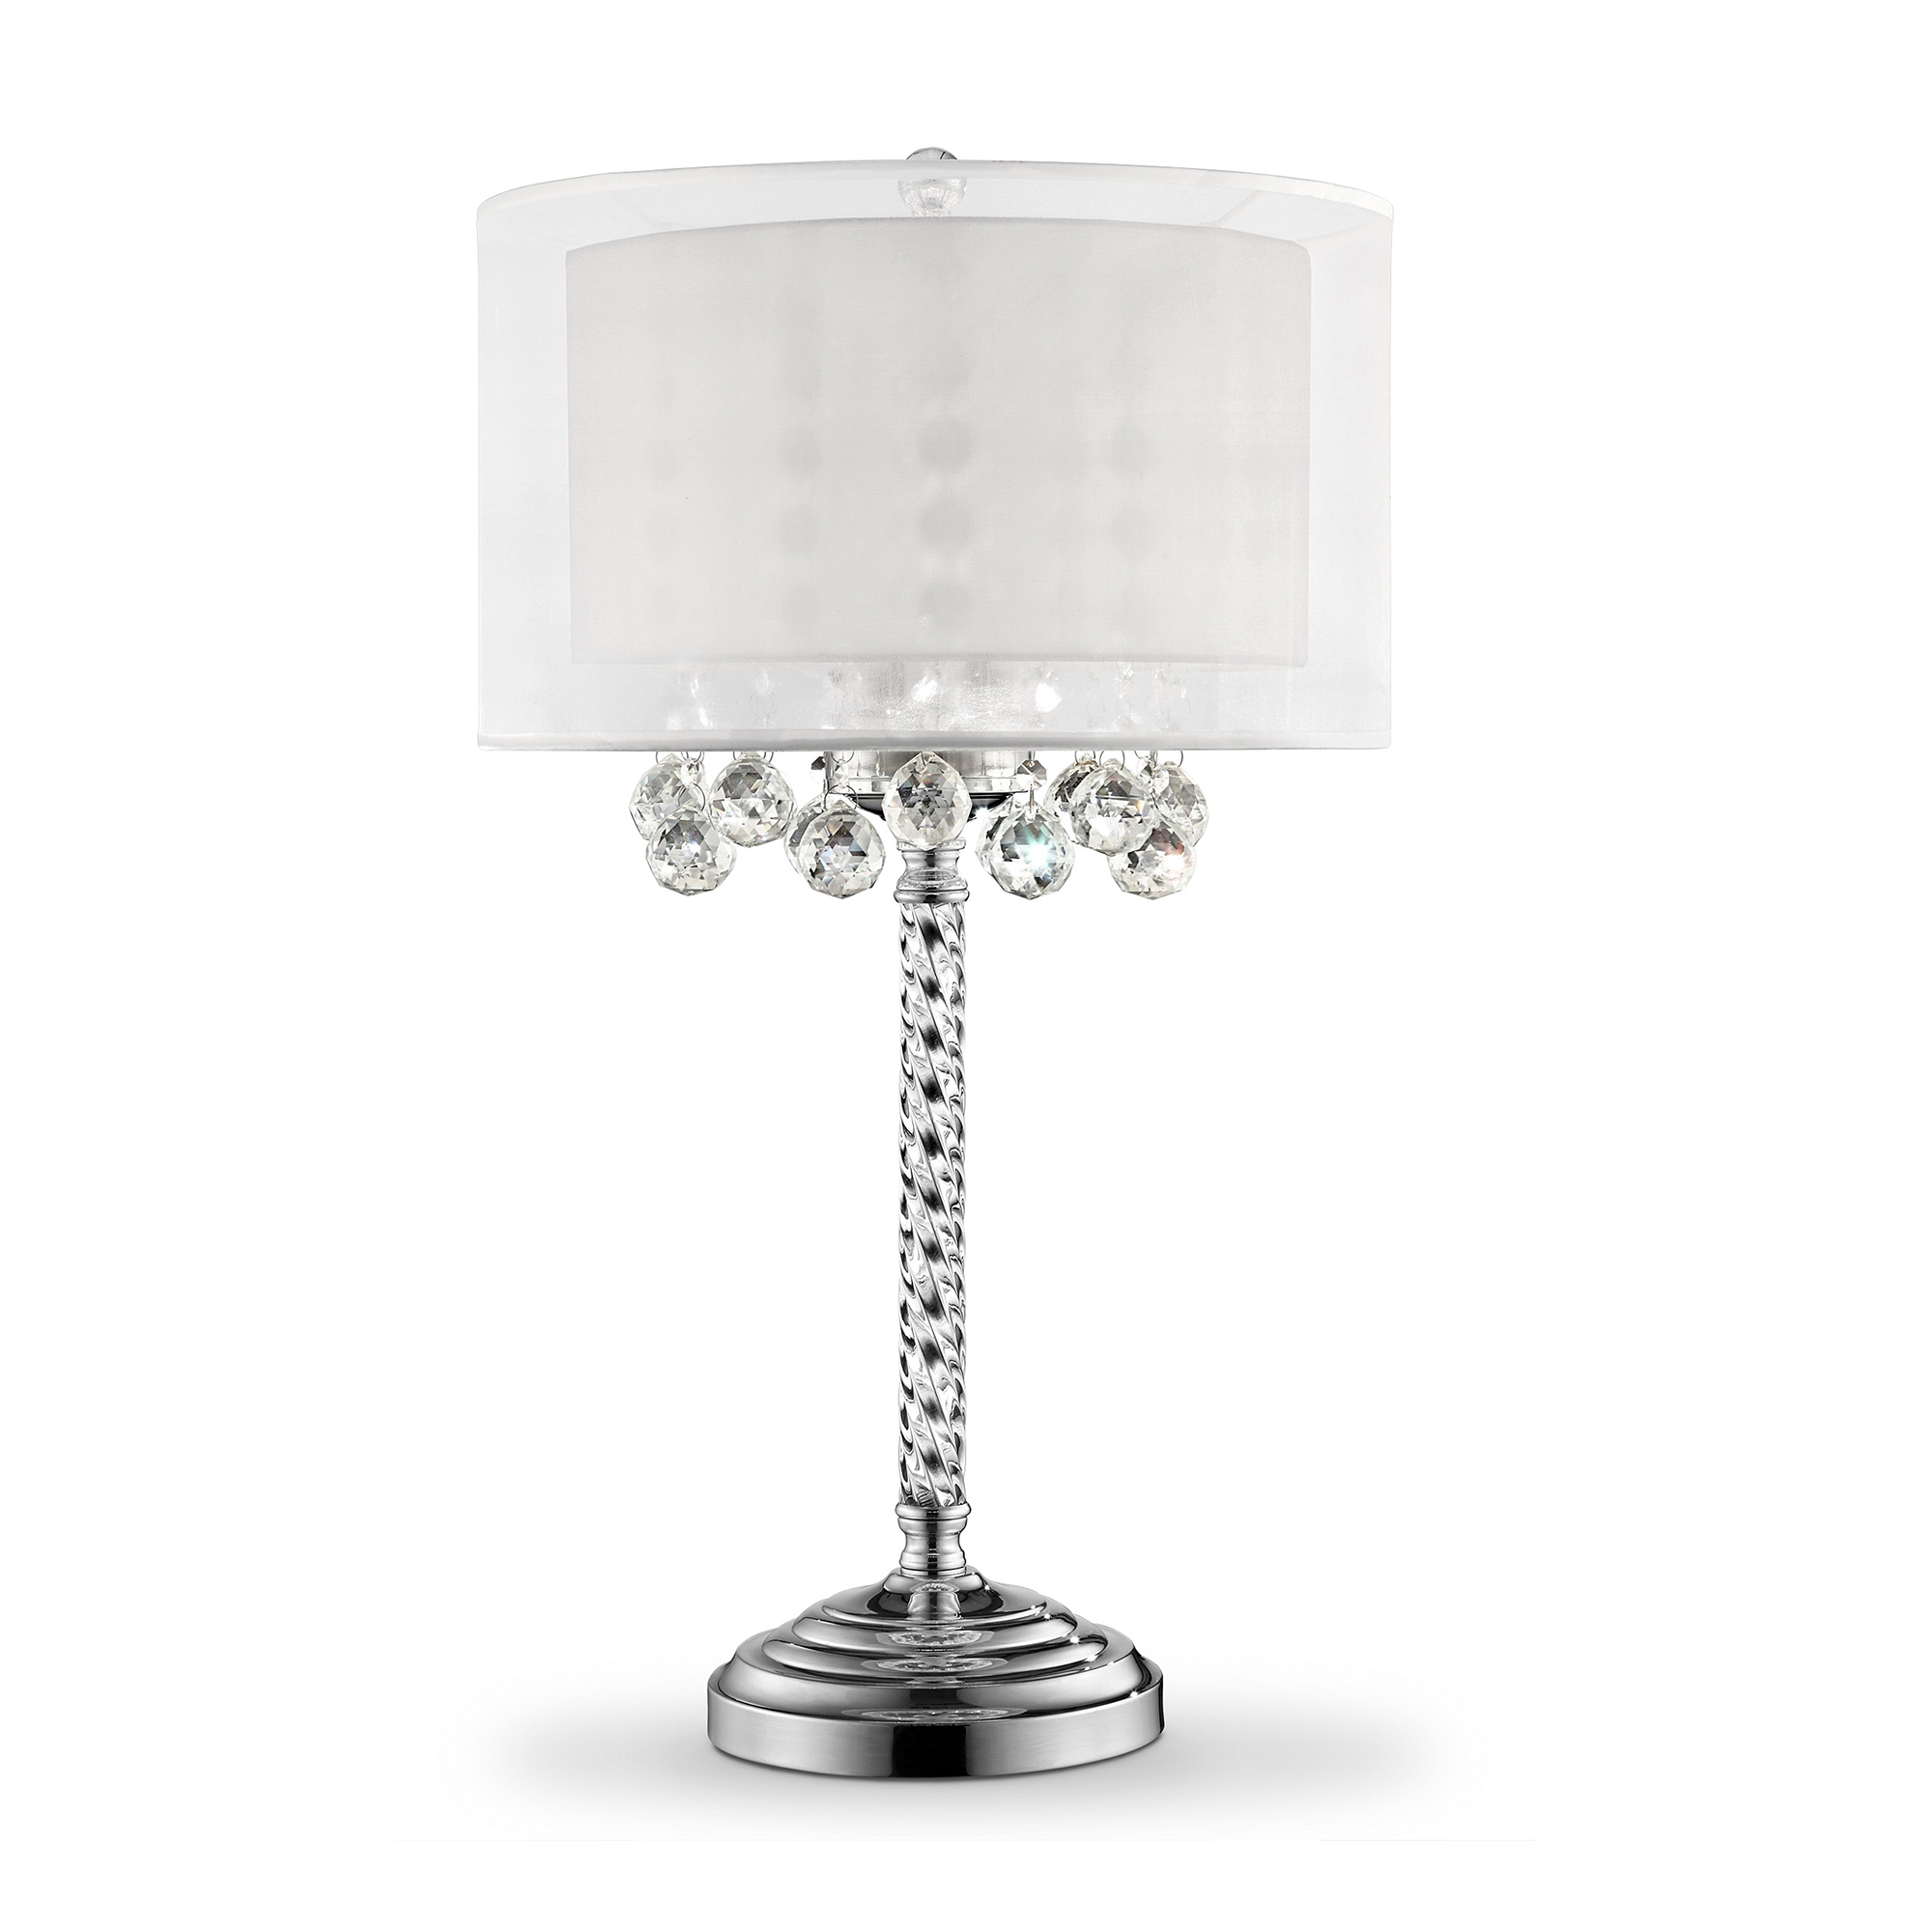 Ore International 30" moiselle crystal table lamp